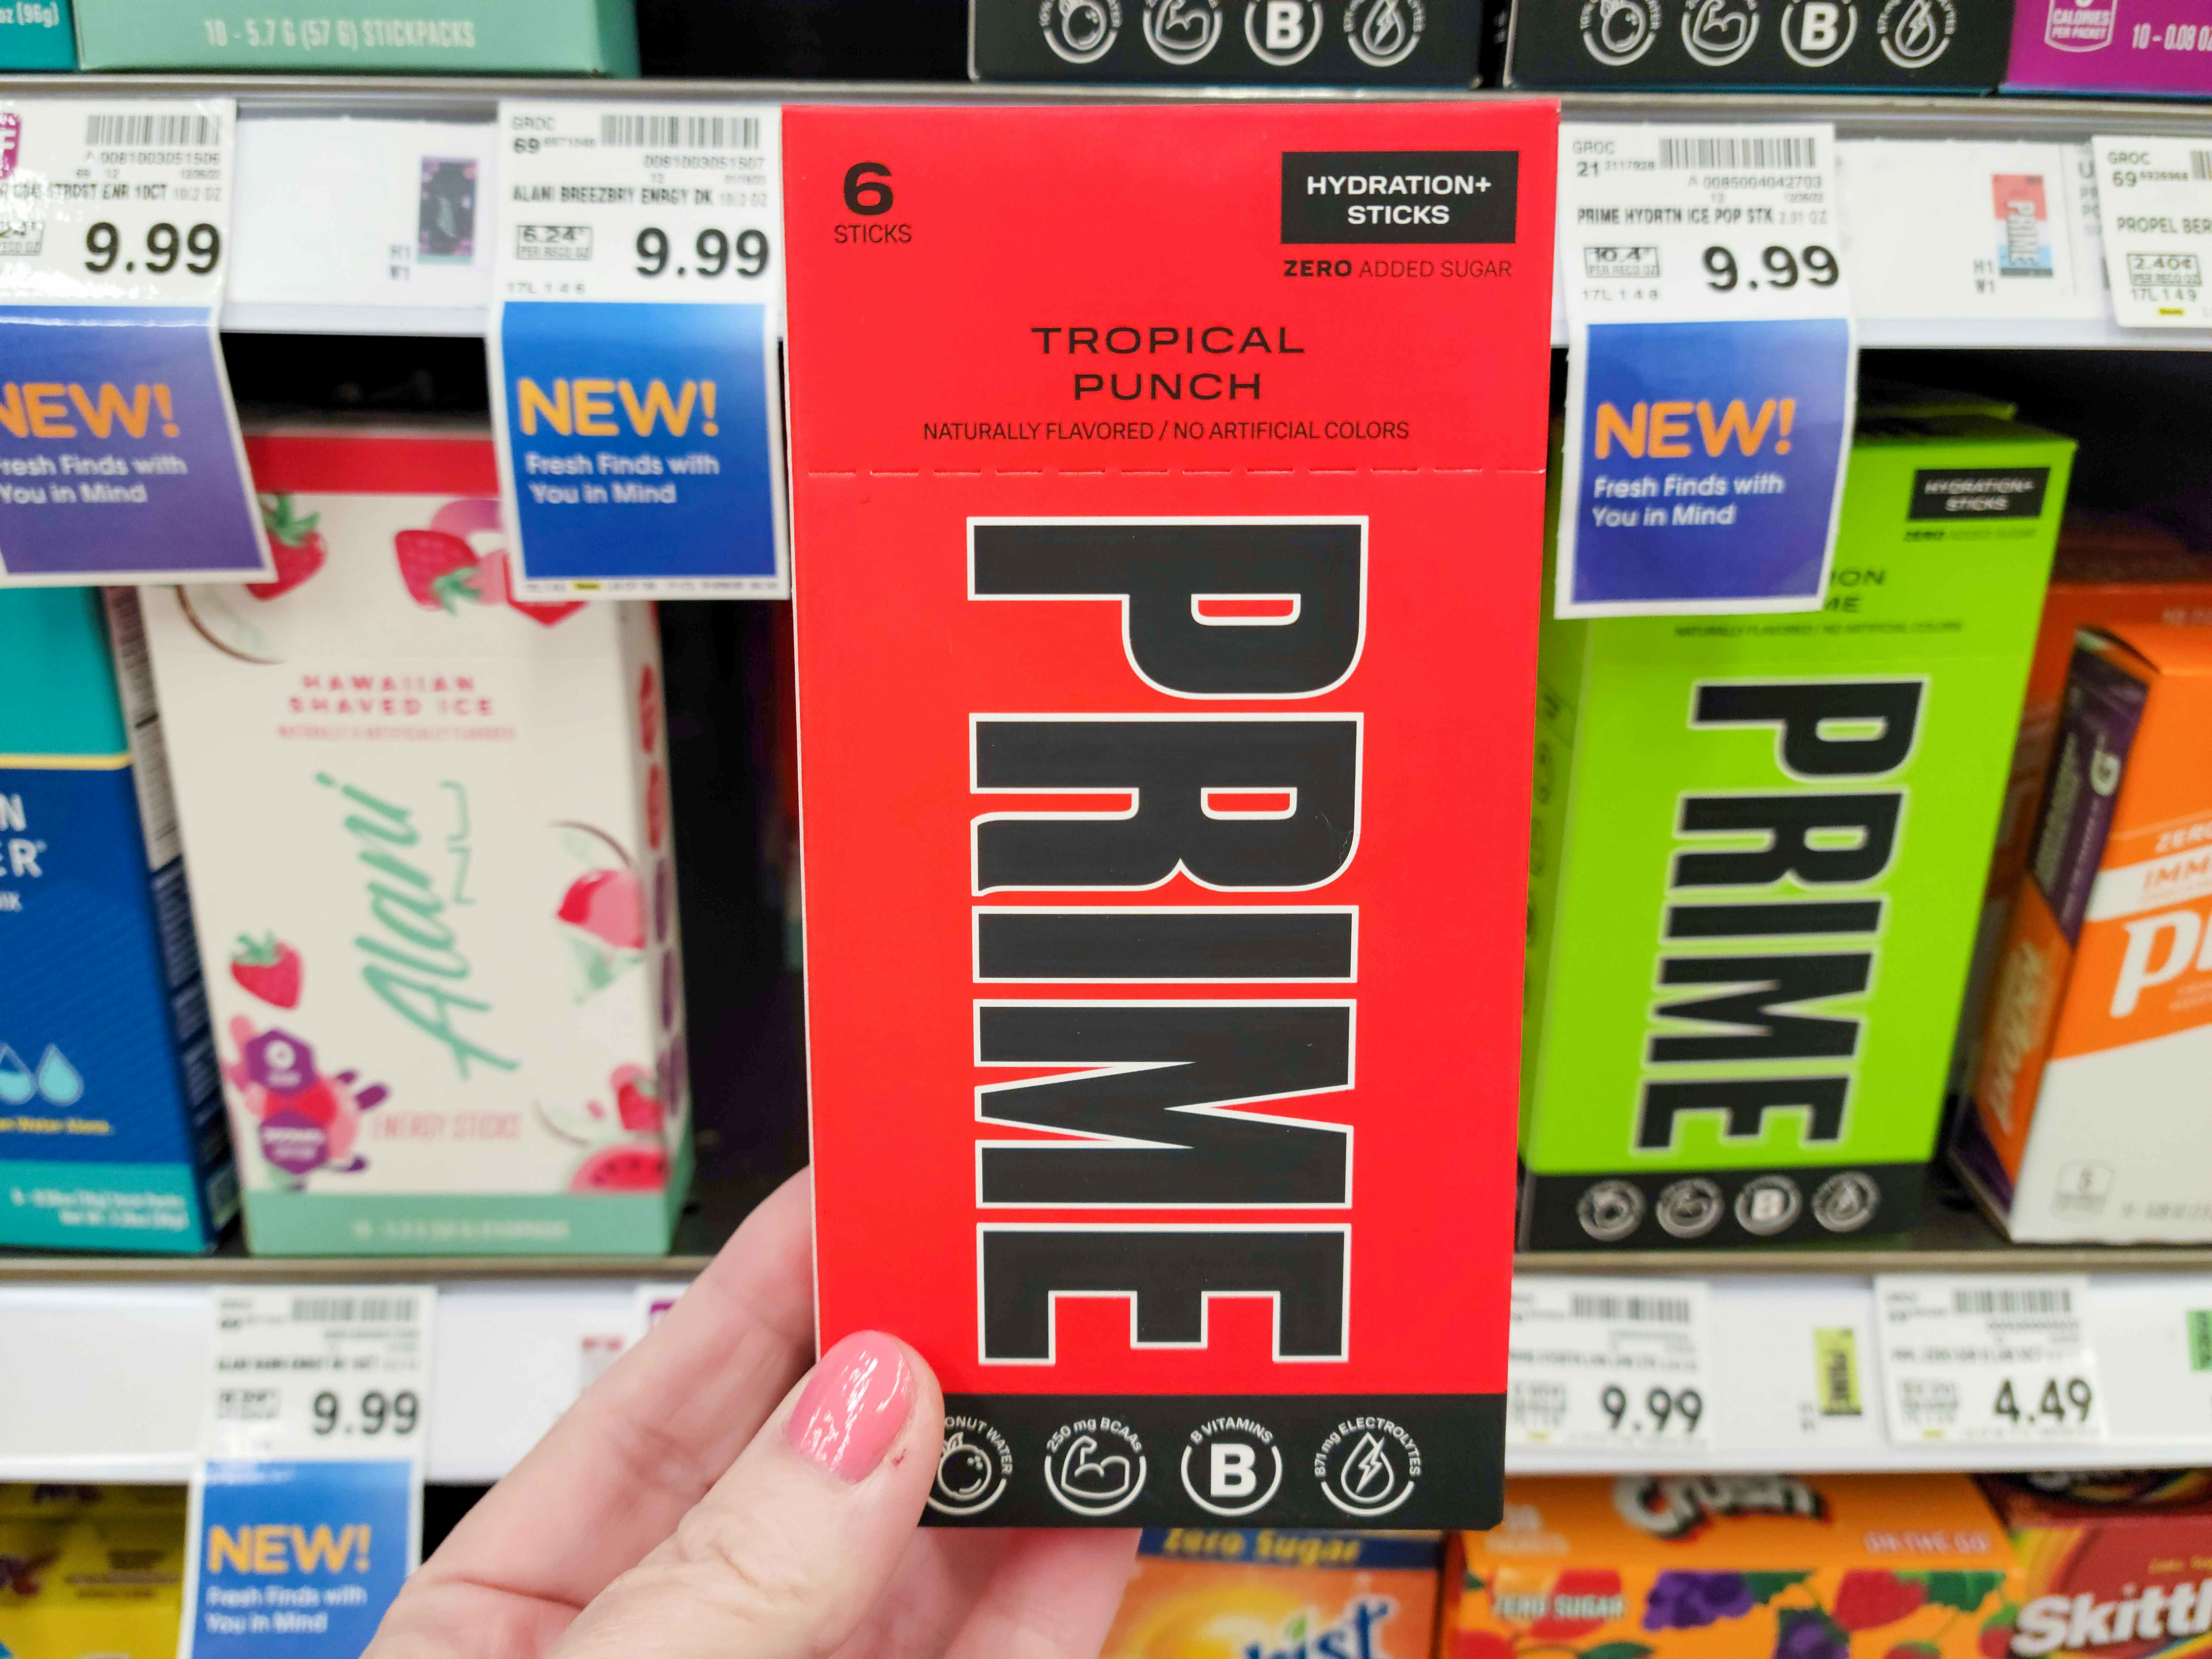 Prime drink flavors